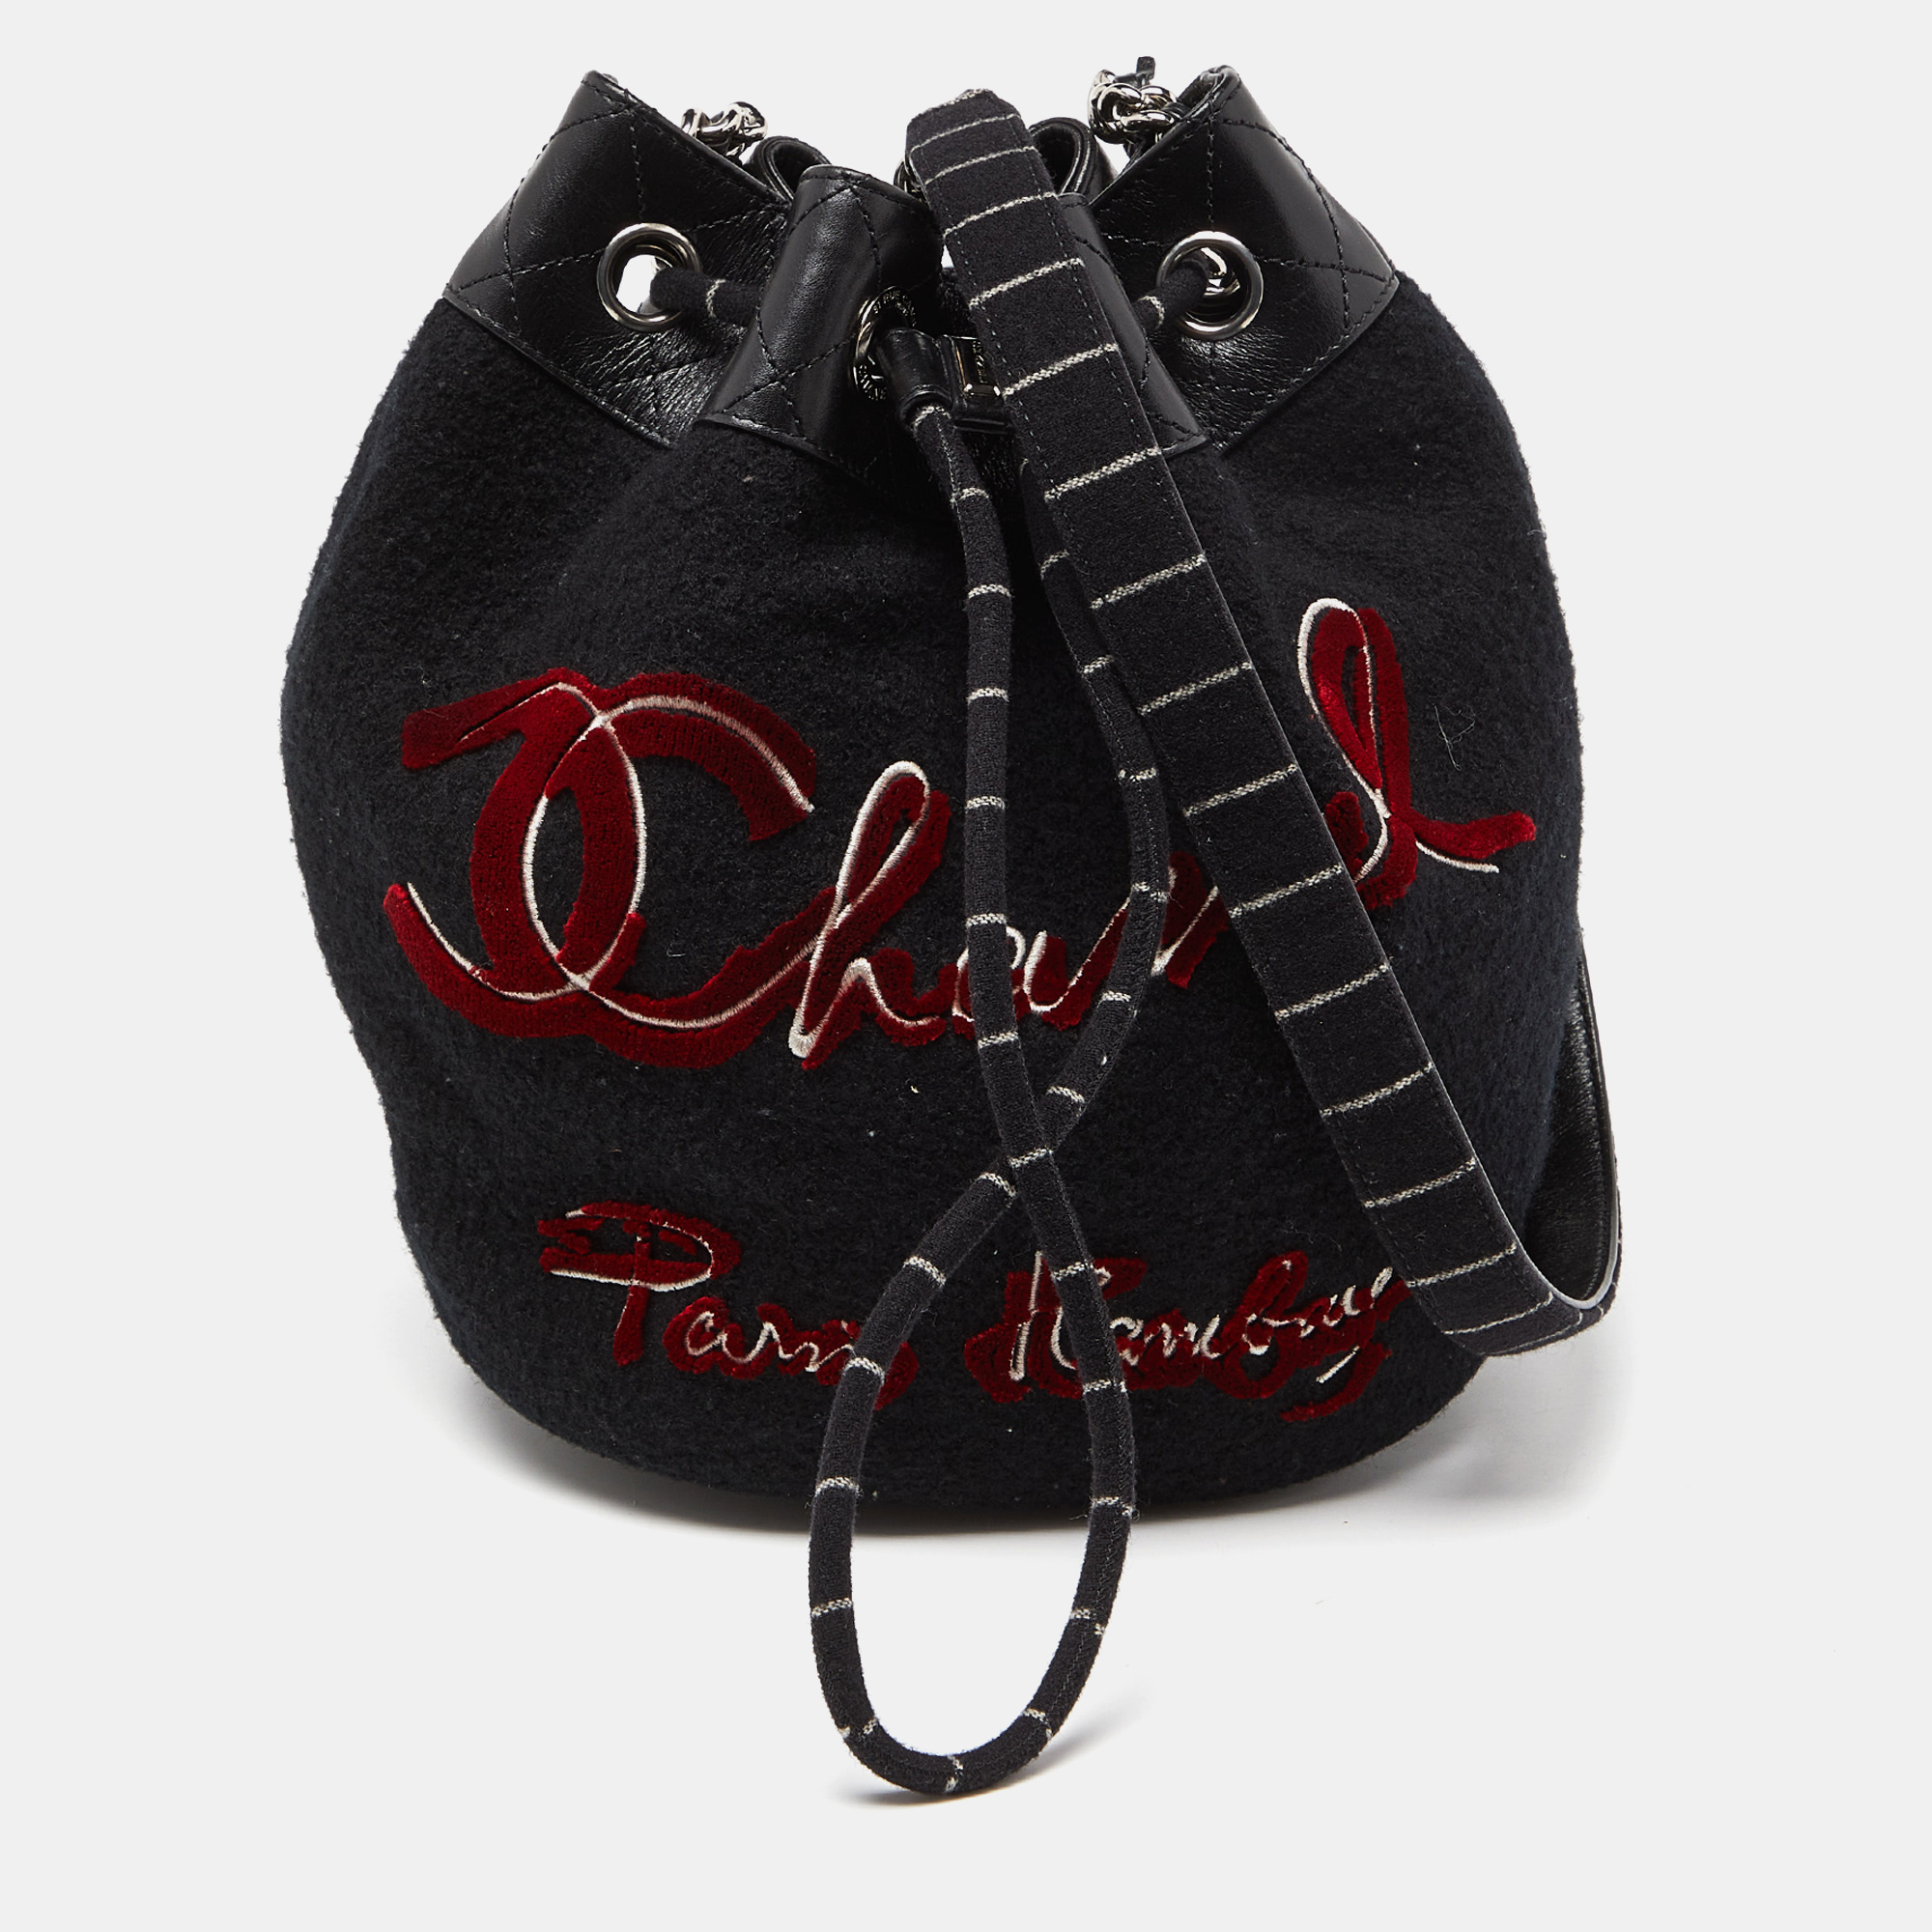 Chanel black wool and leather embroidered paris hamburg drawstring bag